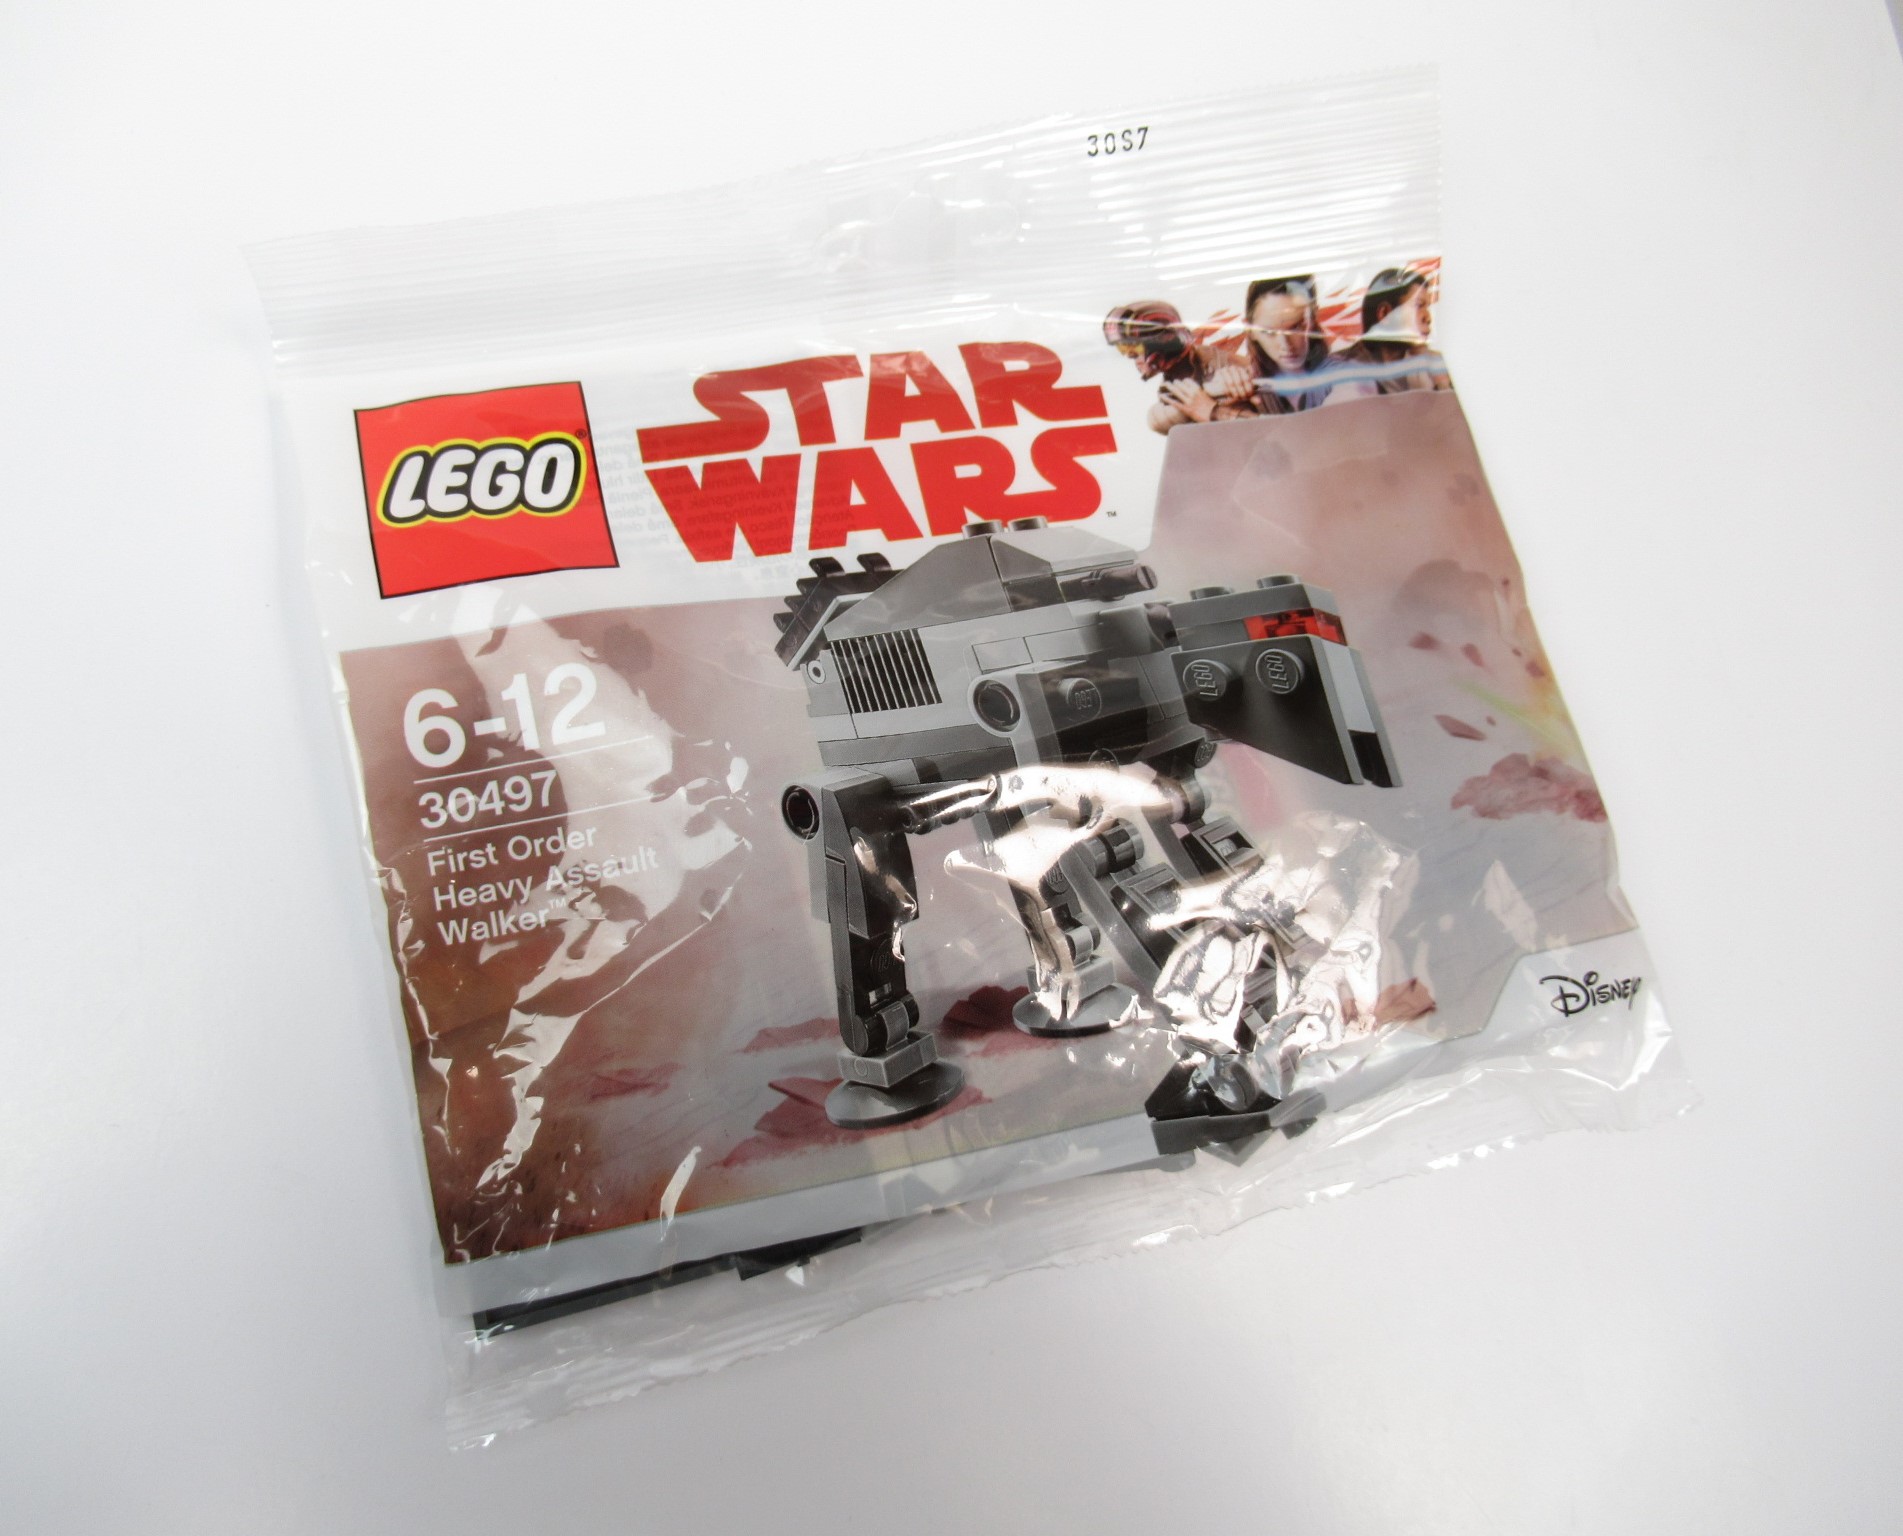 LEGO Star Wars 30497 First Order Heavy Assault Walker Polybag의 그림